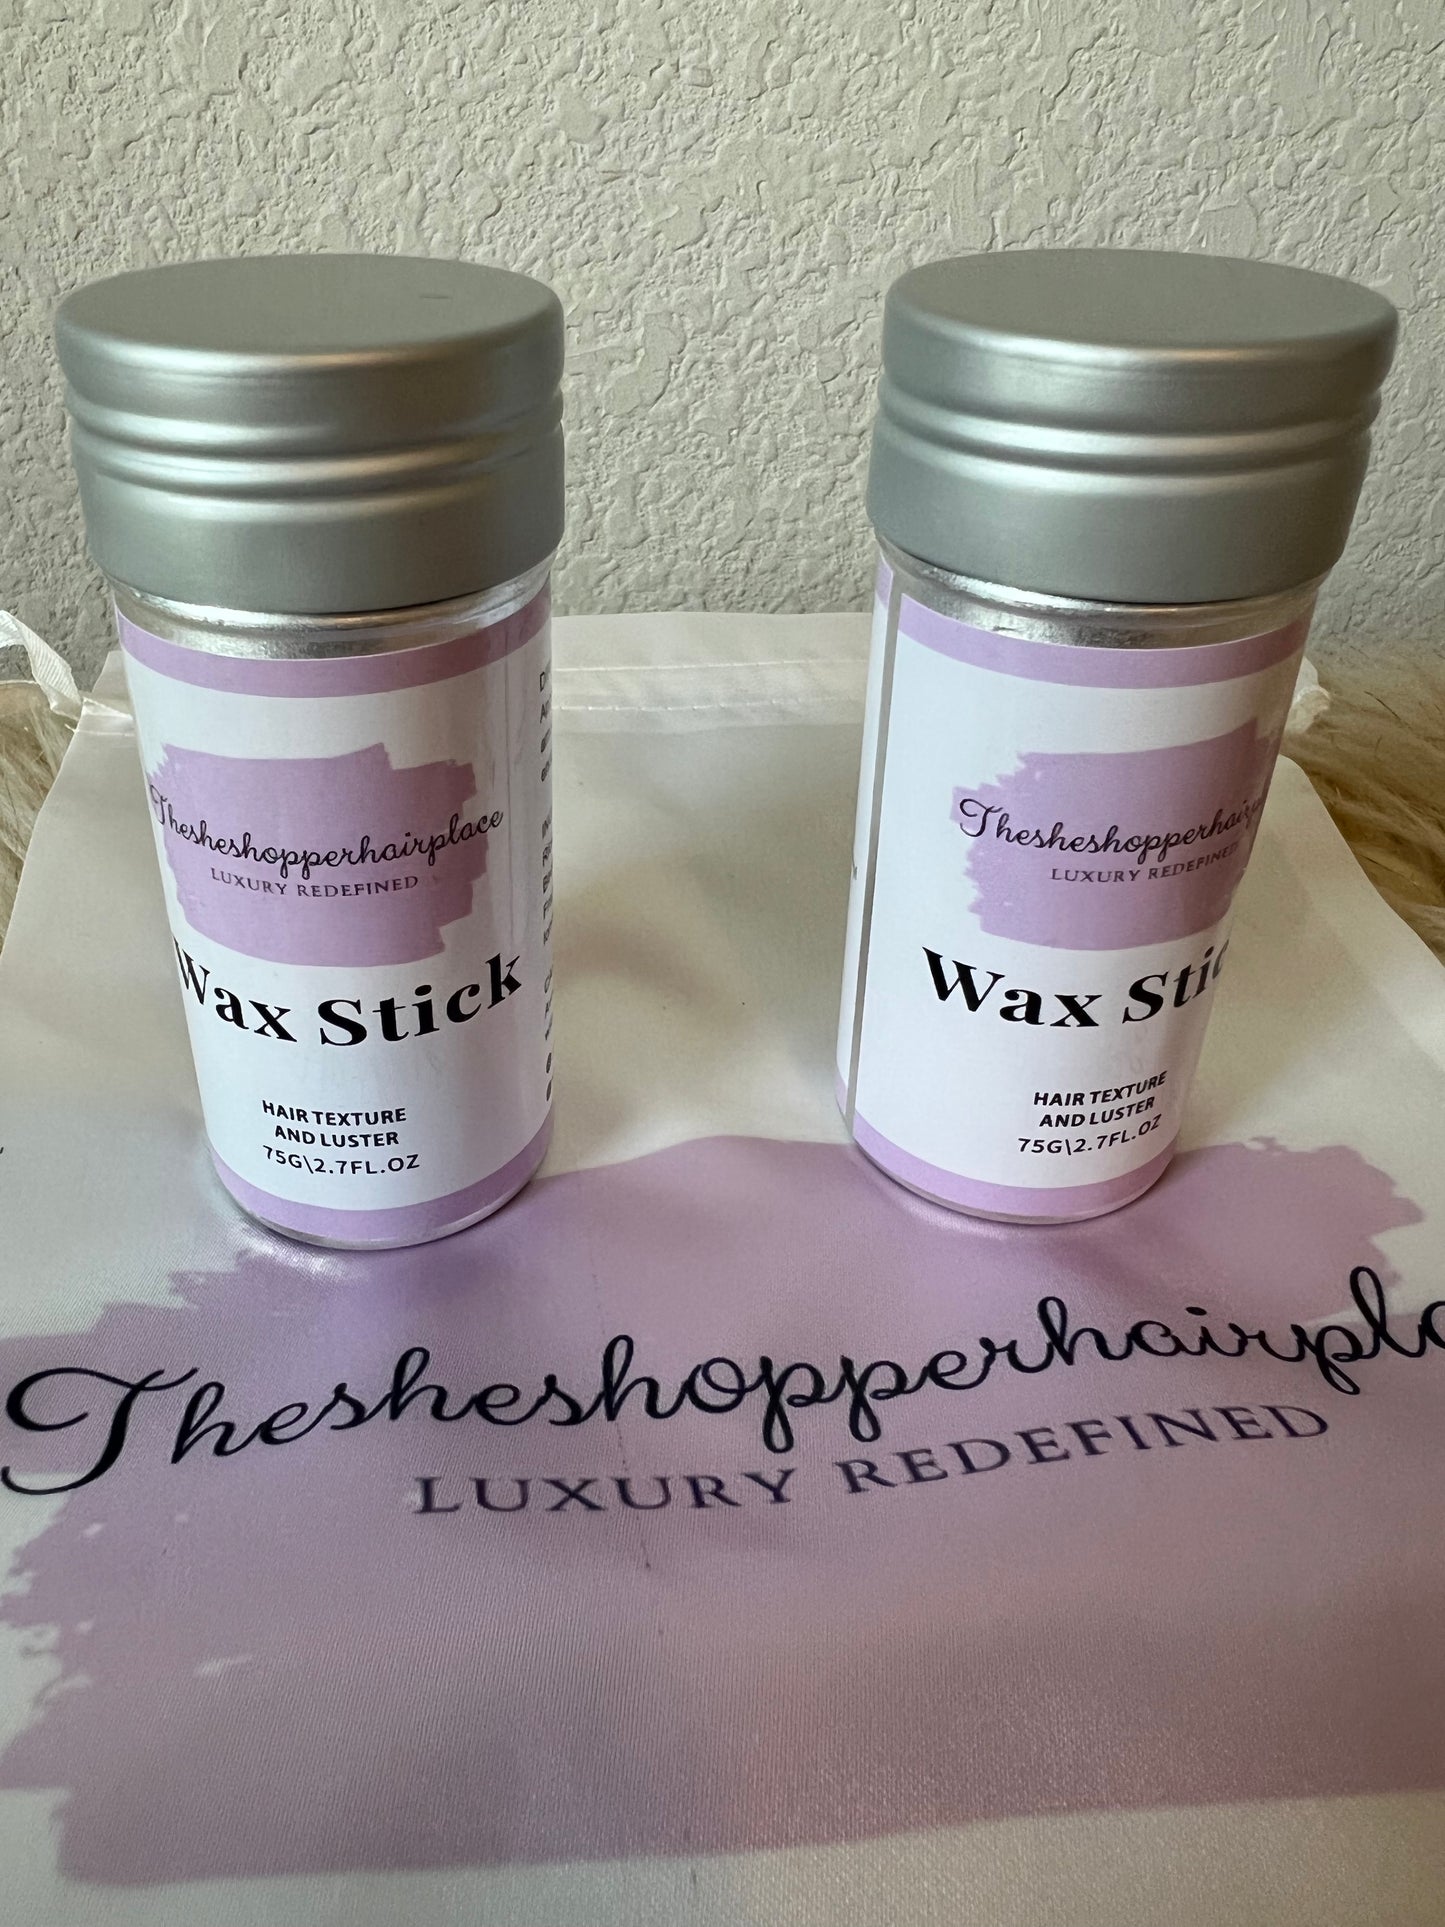 Wax stick - sheshopperhairplace LLC